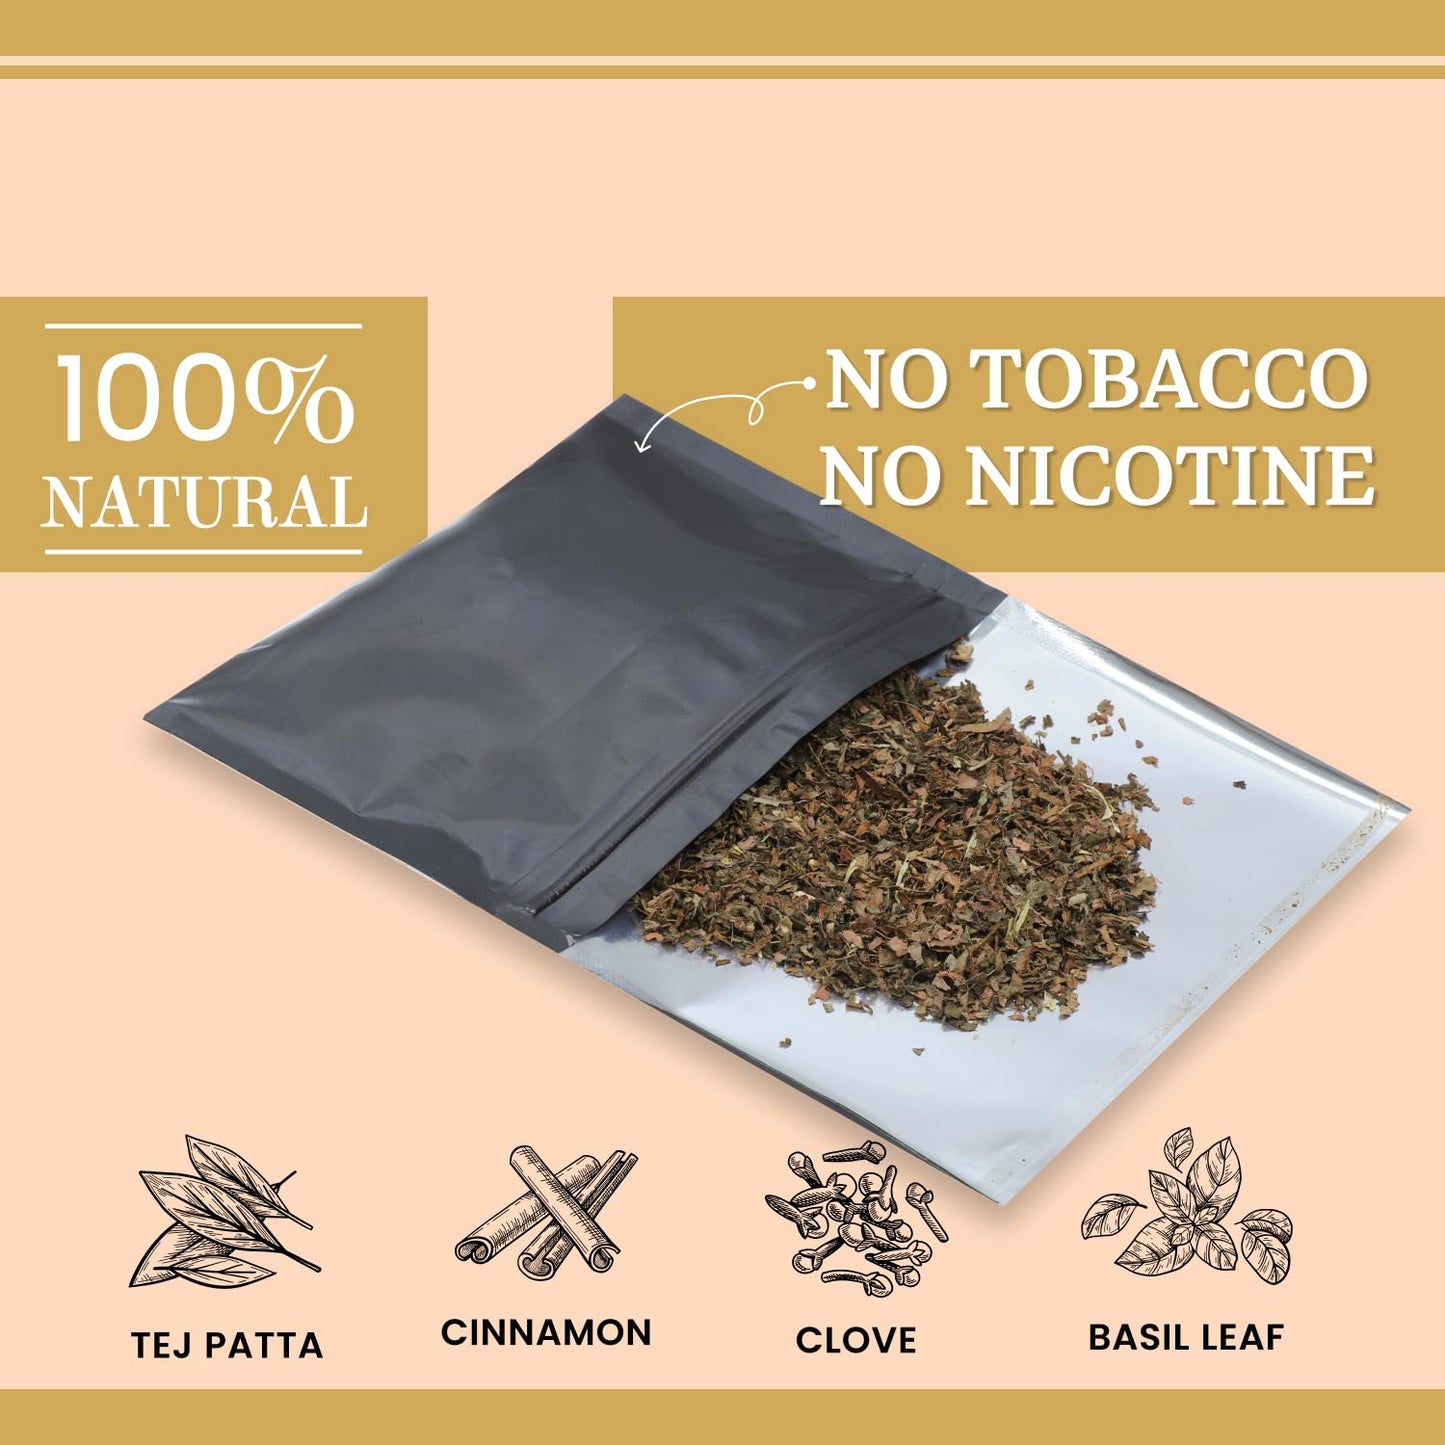 100% Nicotine & Tobacco Free Smoking Mixture(20 gram) | Ginger Flavor